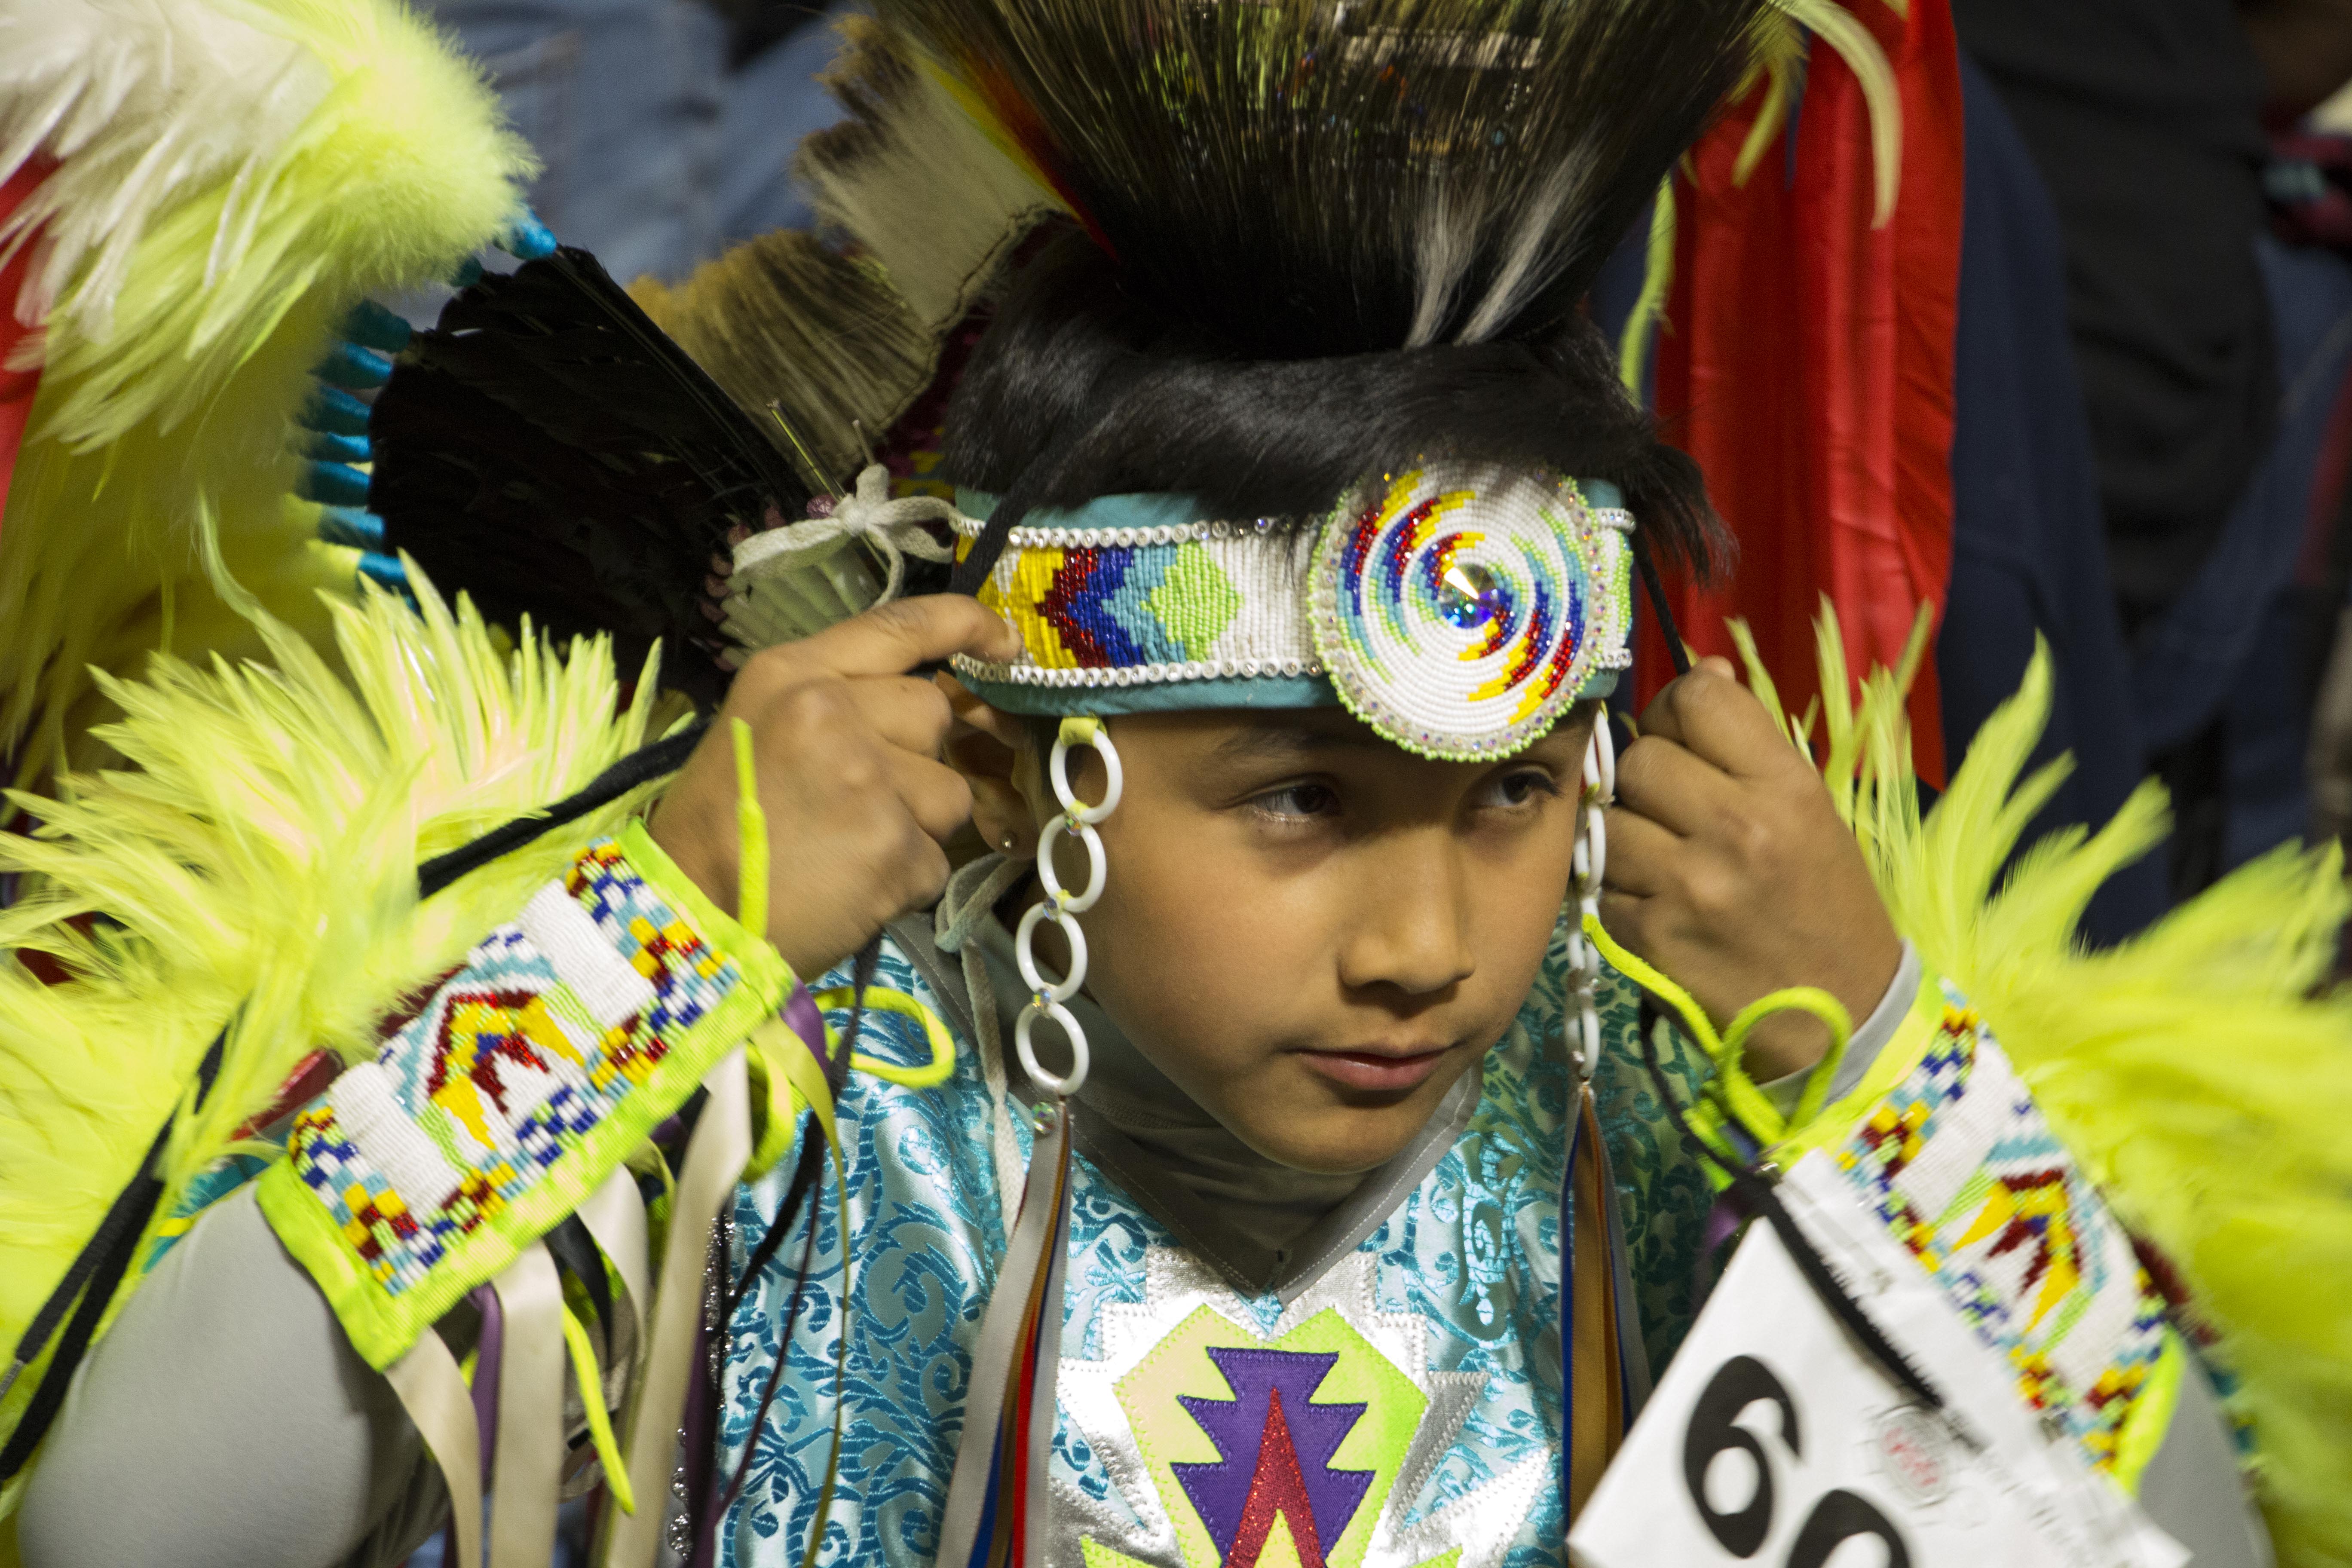 46th annual Wacipi celebrates Native culture, spreads awareness